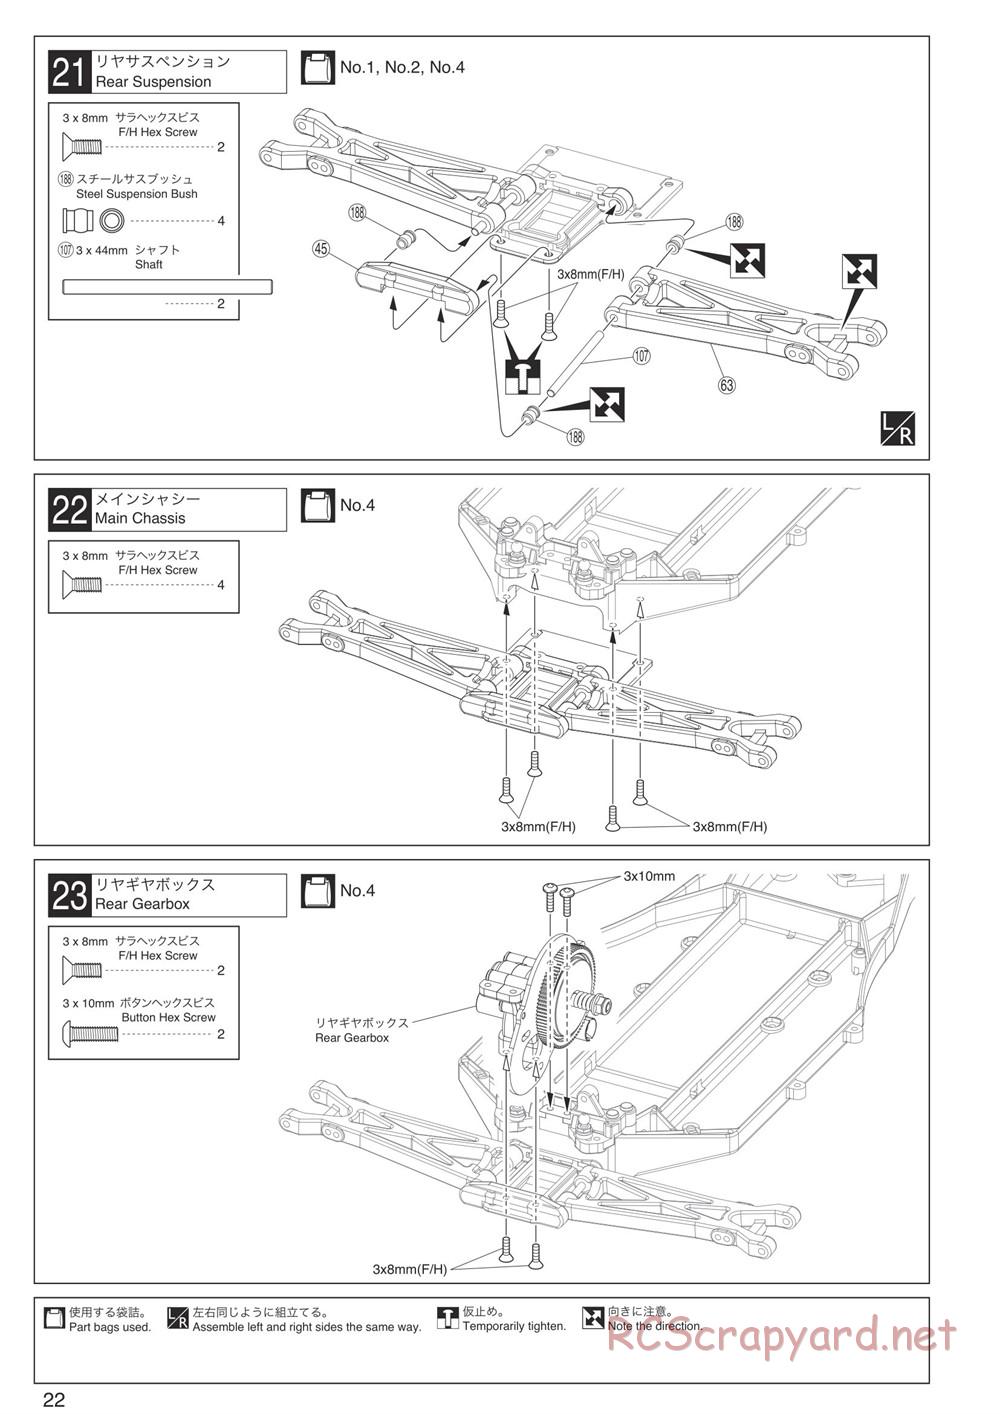 Kyosho - Ultima SCR - Manual - Page 22